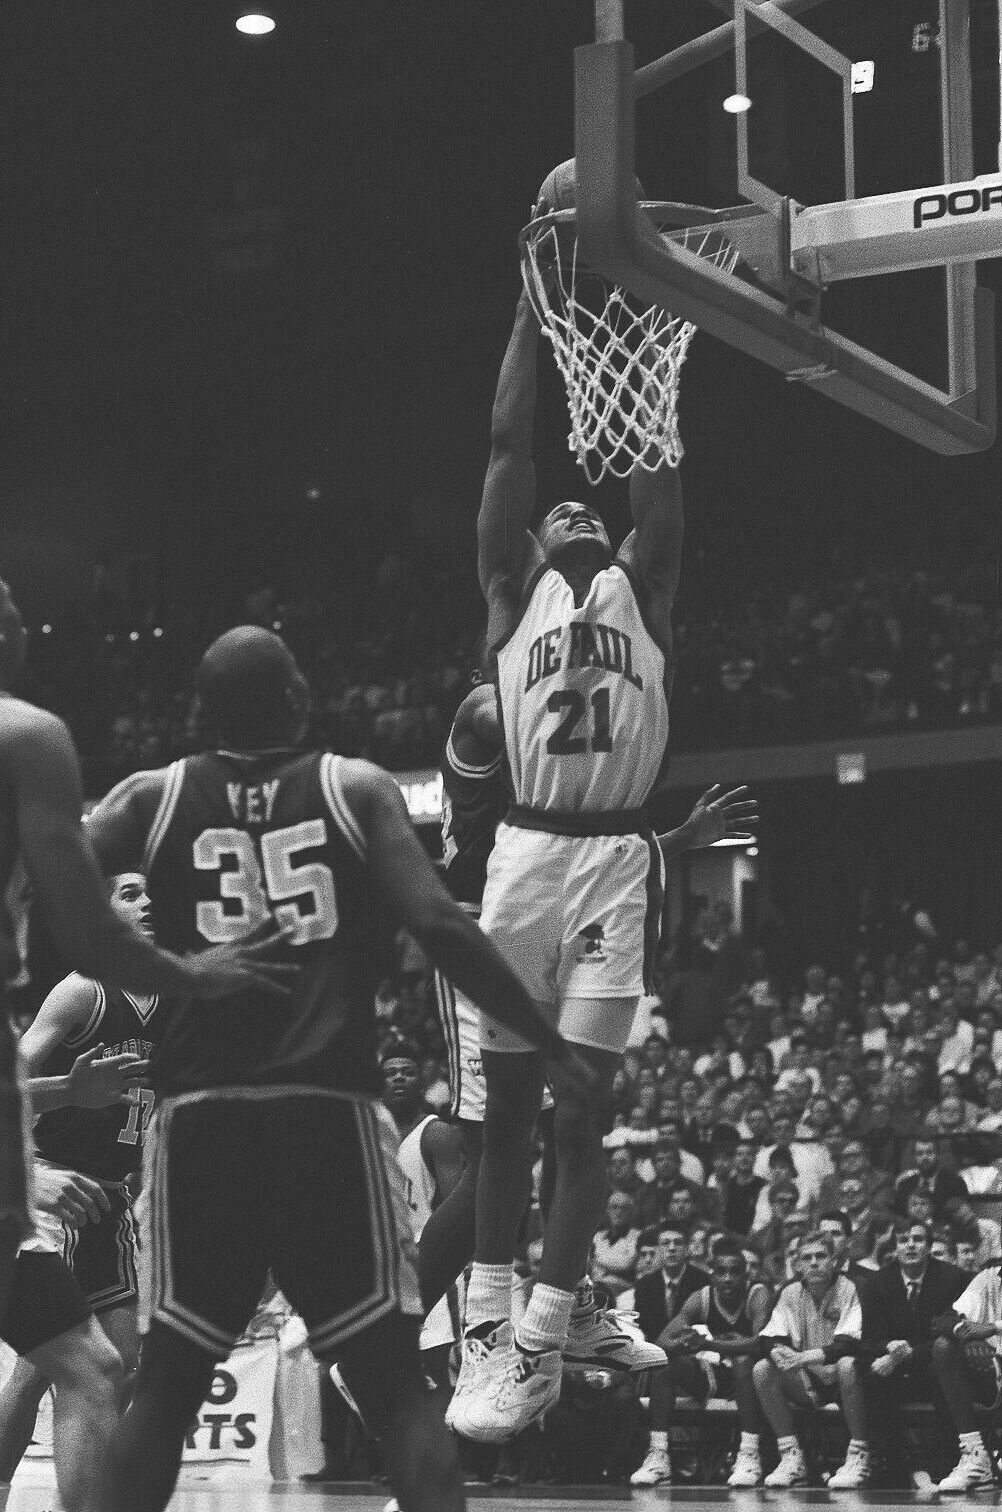 LD126-15 1992 College Basketball DePaul Marquette (140) ORIG 35mm B&W NEGATIVES Без бренда - фотография #6